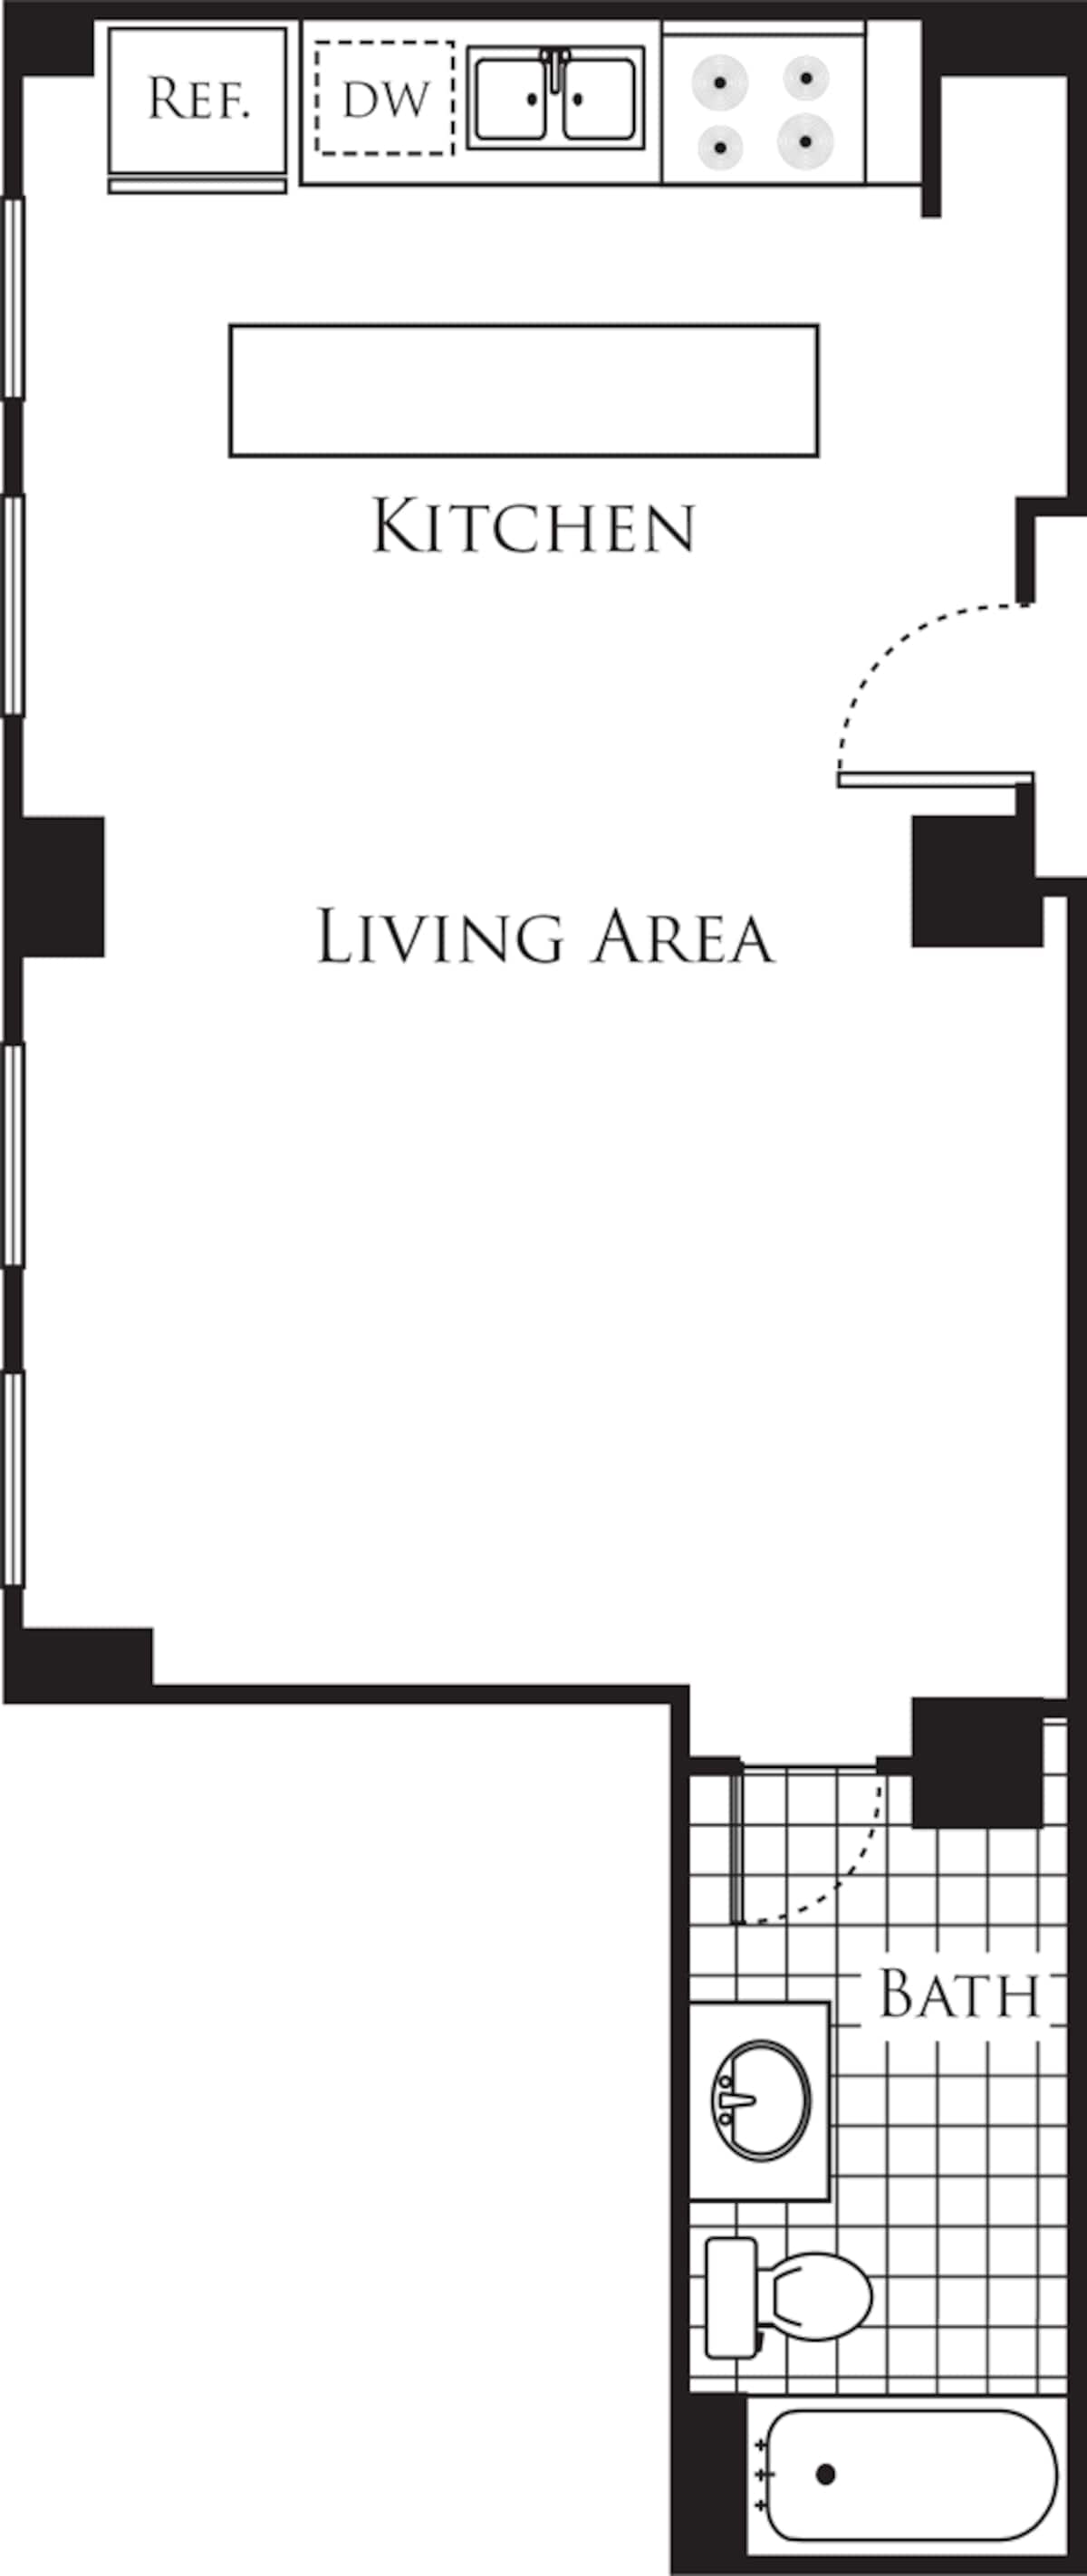 Floorplan diagram for Studio A3, showing Studio